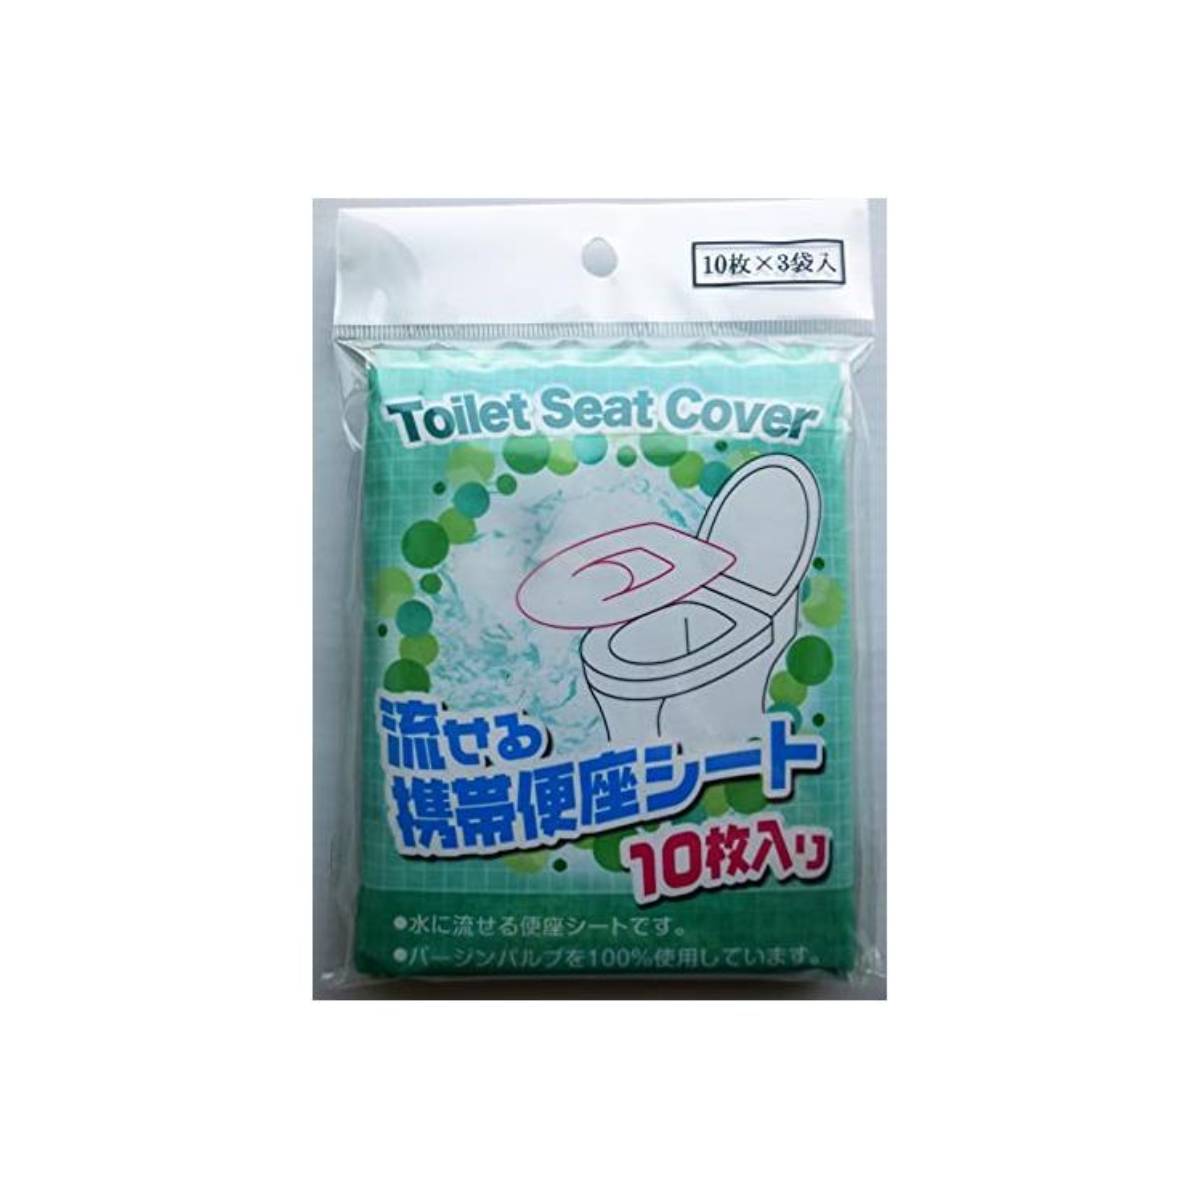 Toilet Seat Cover - Japan Q10x3